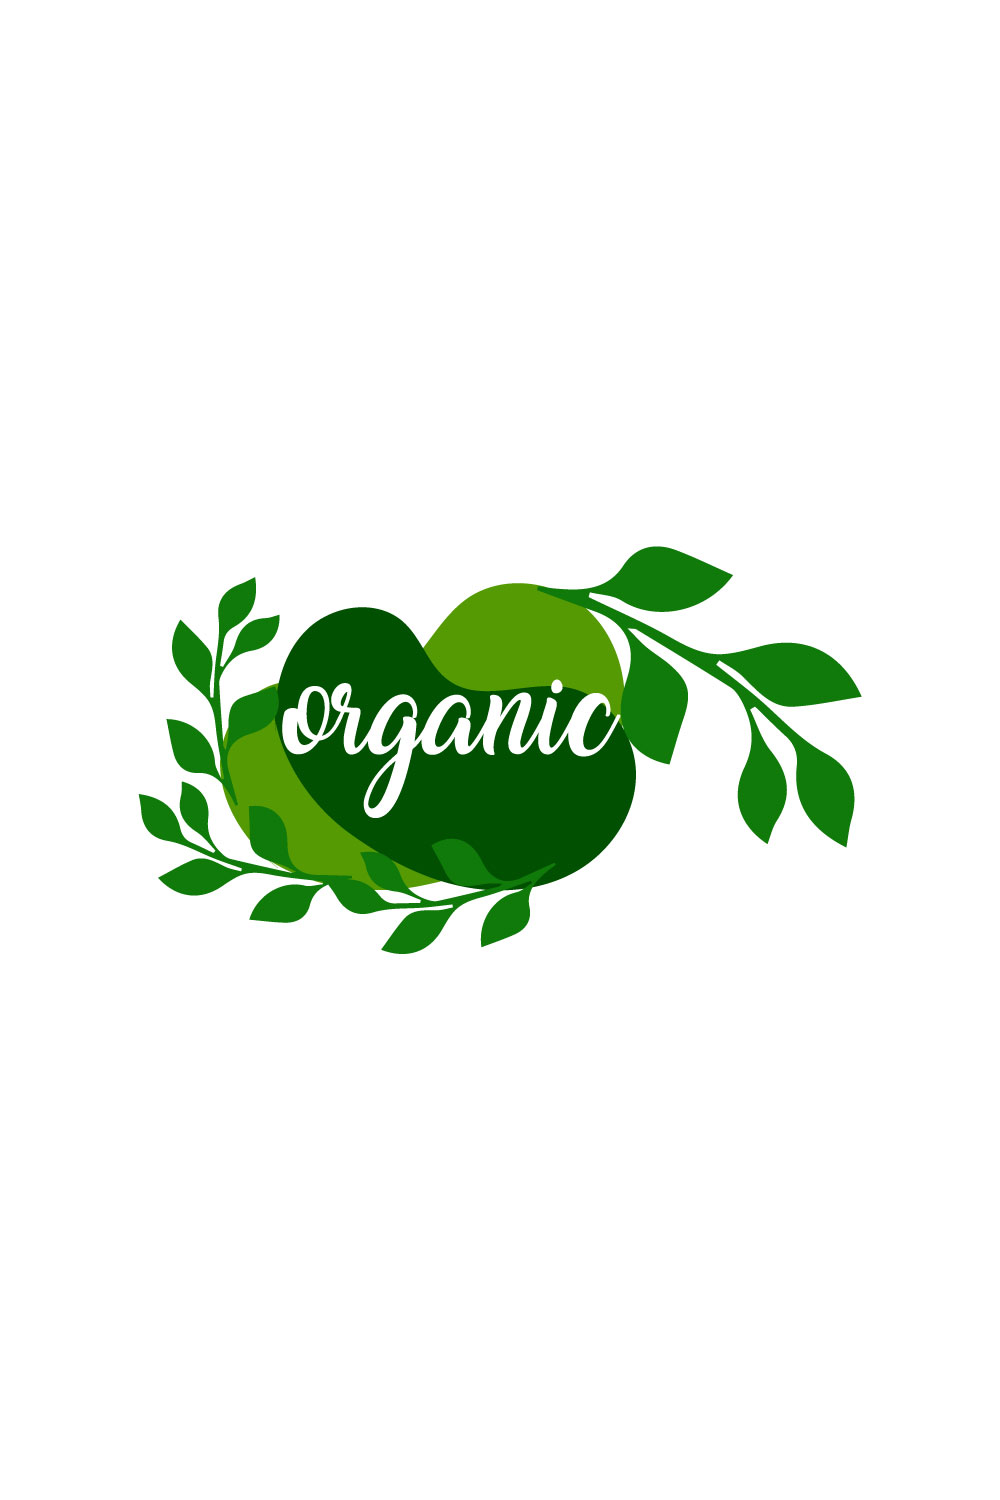 Free Holistic organic logo pinterest preview image.